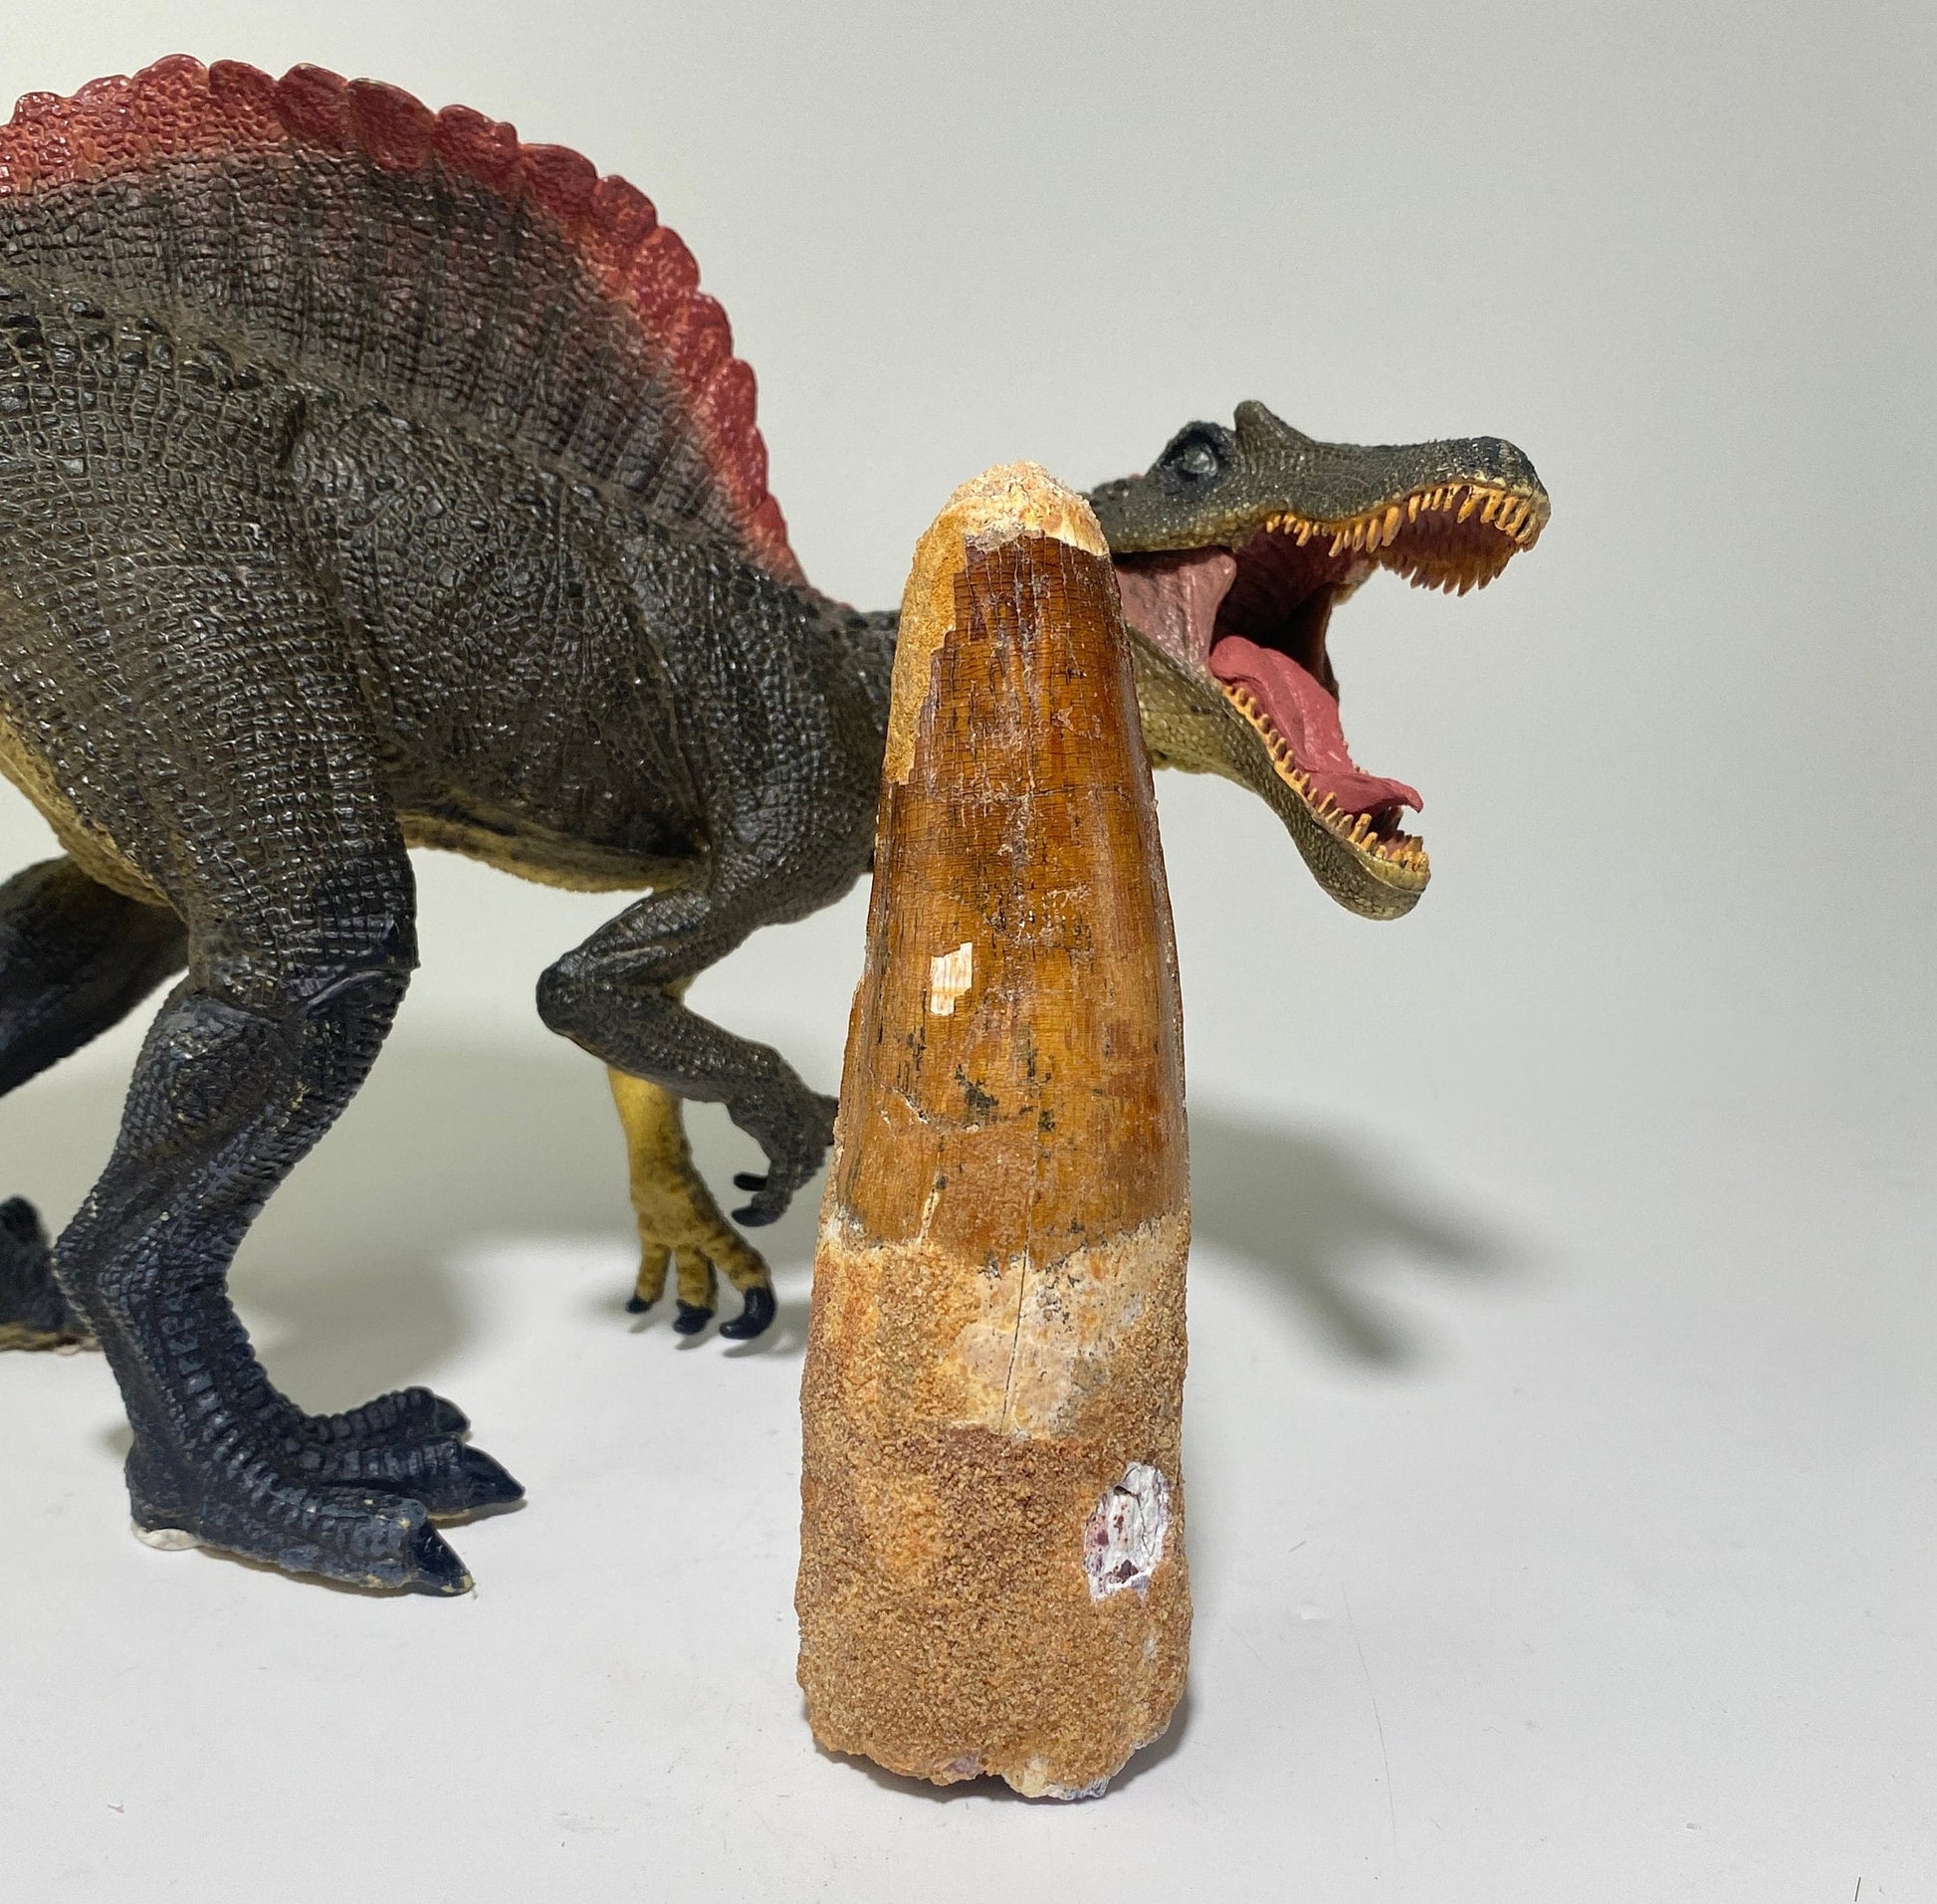 Real Spinosaurus tooth